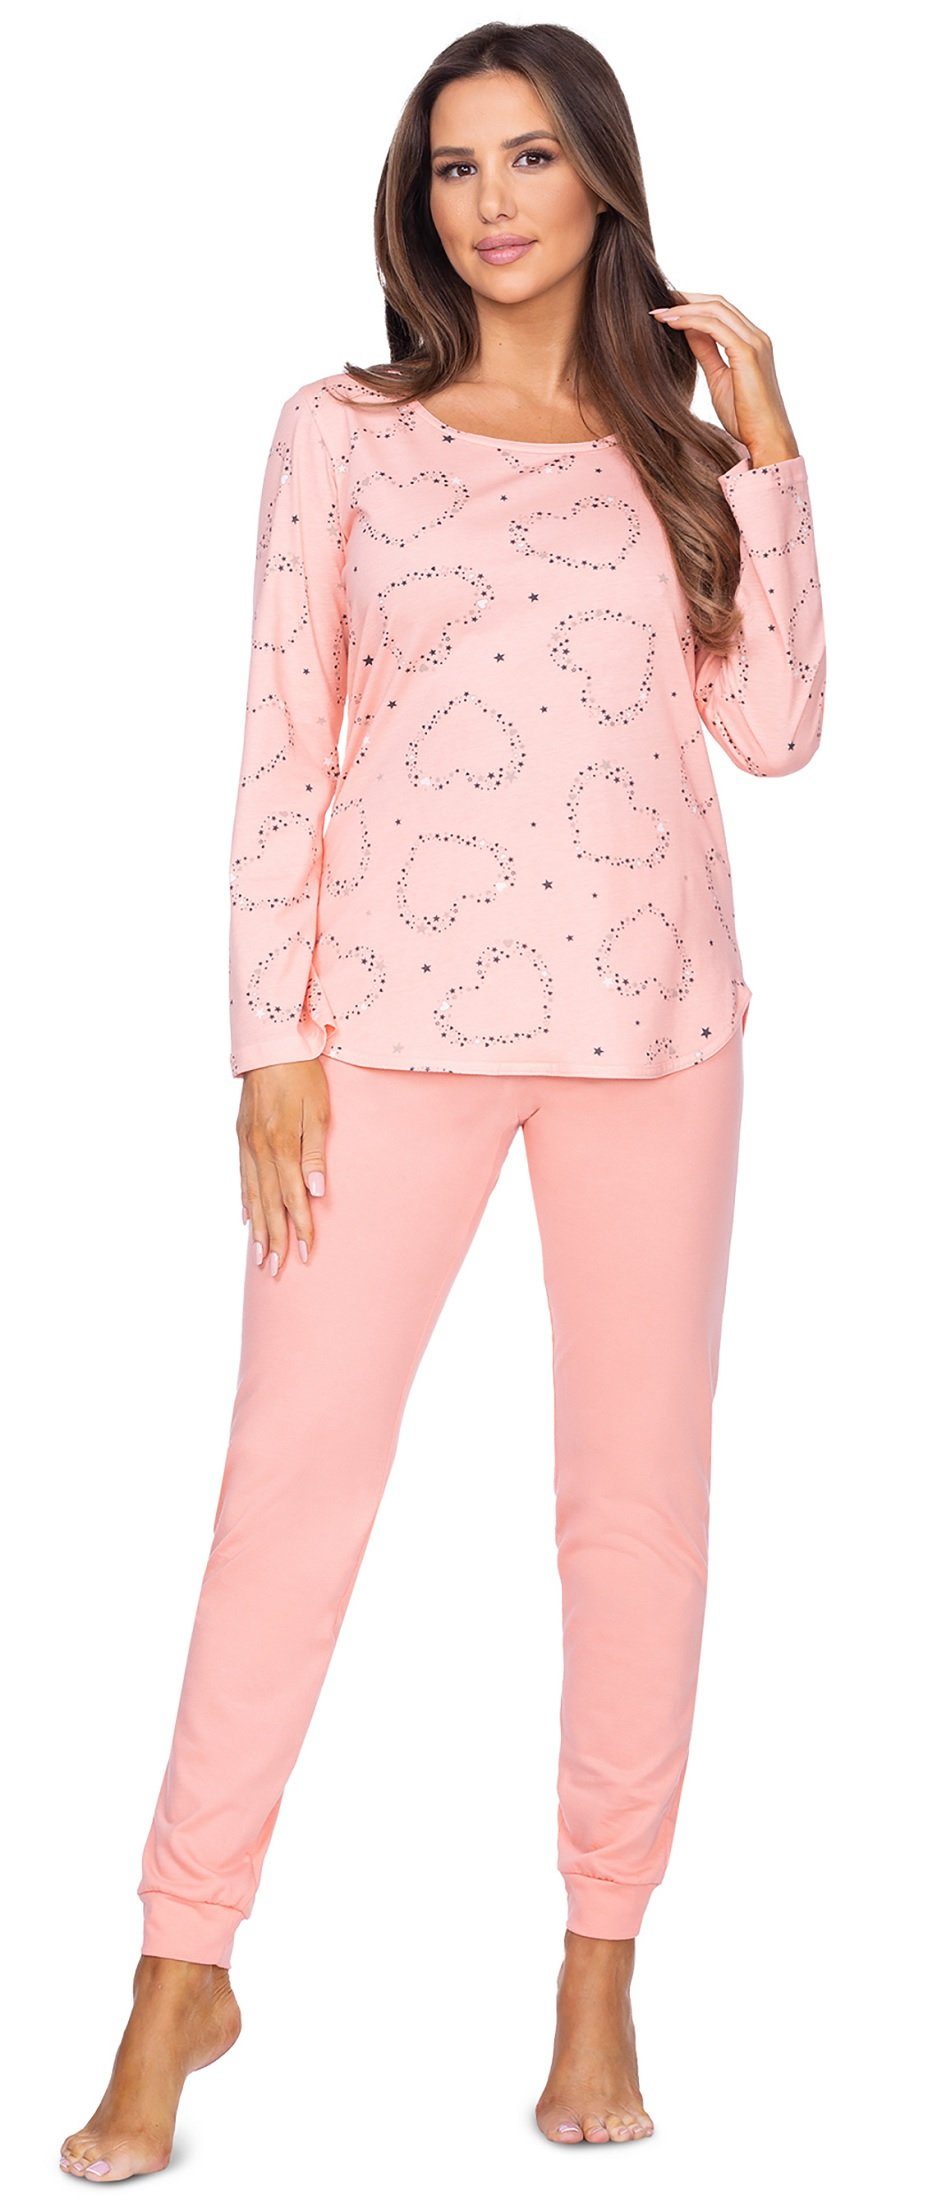 REGINA Schlafanzug langarm, Pyjama - niedliches Herzmotiv aprikose | Pyjamas